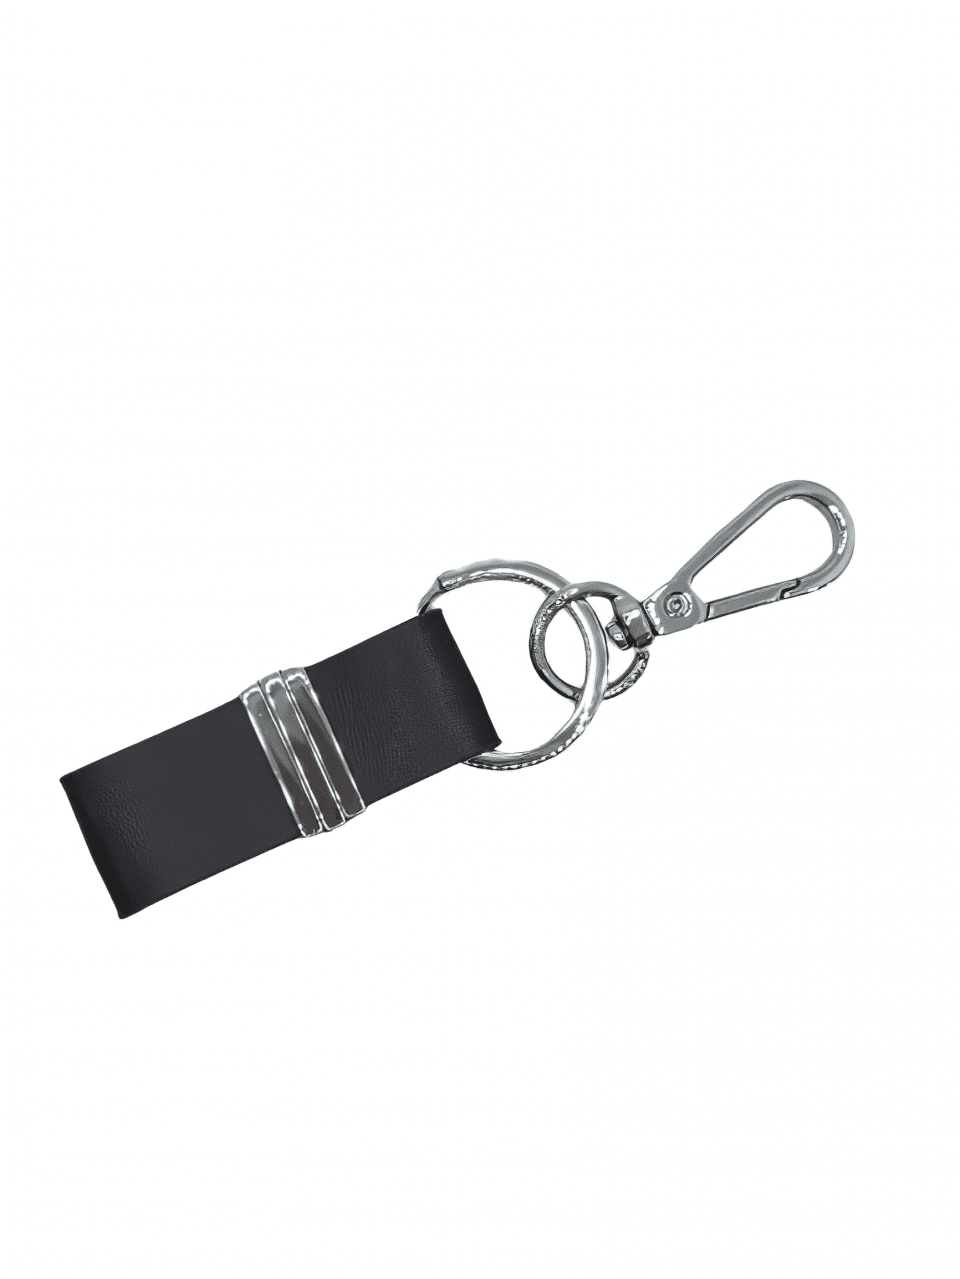 black-leathery-key-chain